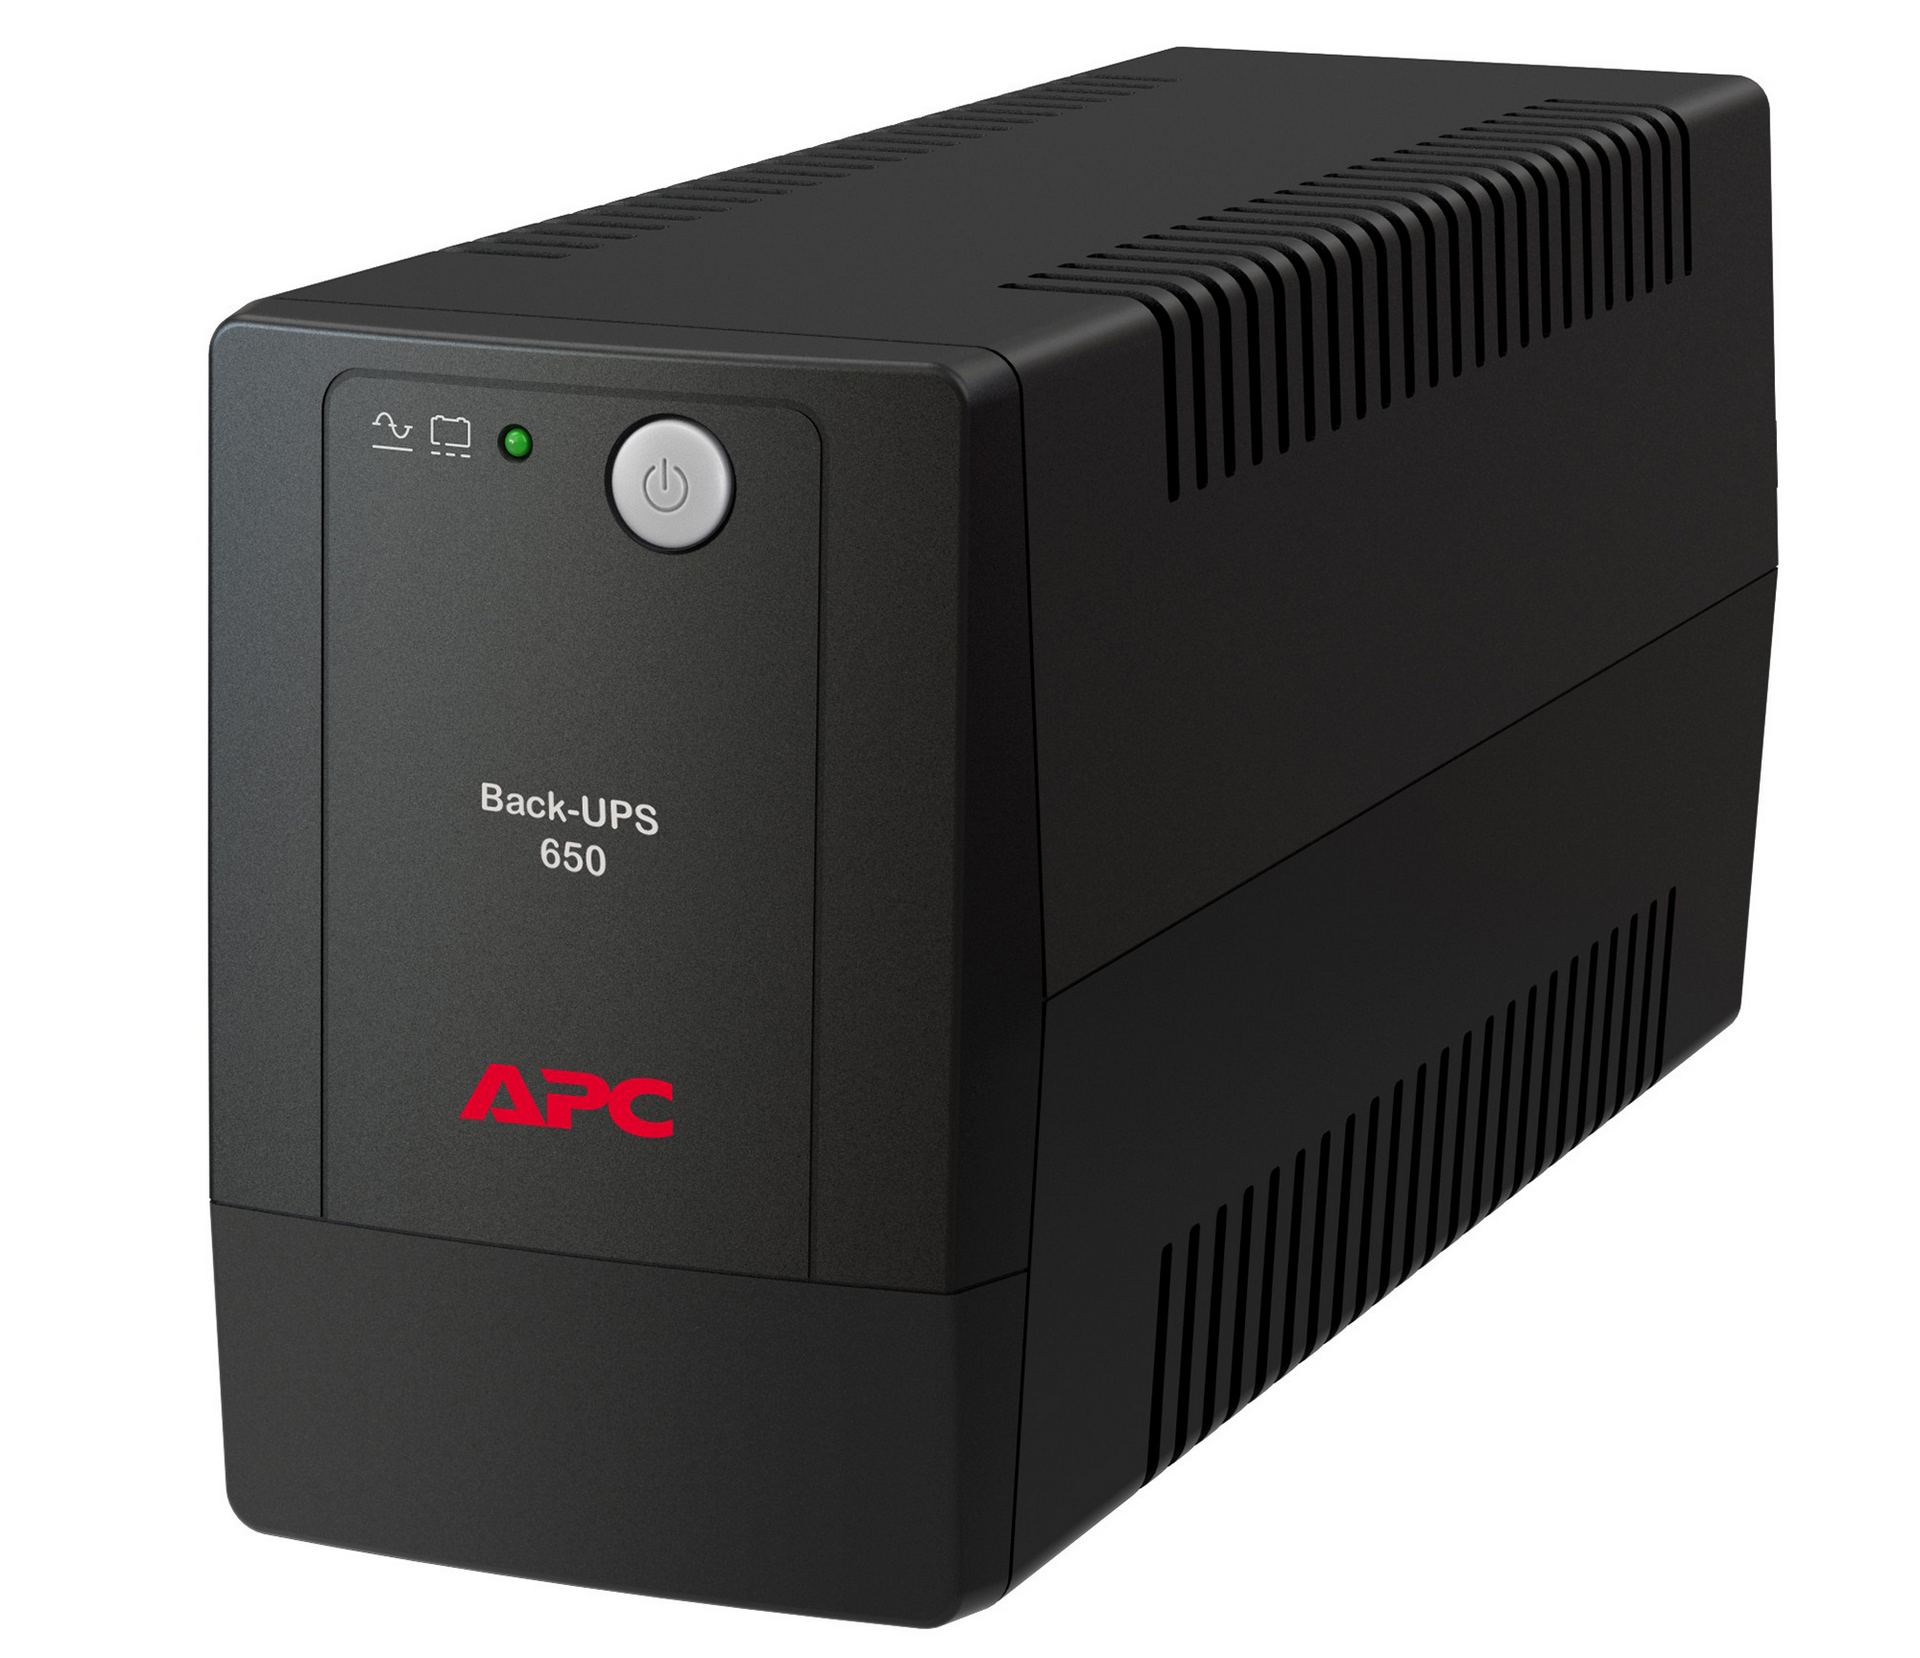 650 bx. Ups 650va back APC. APC by Schneider Electric back-ups bx650li-gr. APC back ups 650. APC back-ups Pro bx650li-gr.